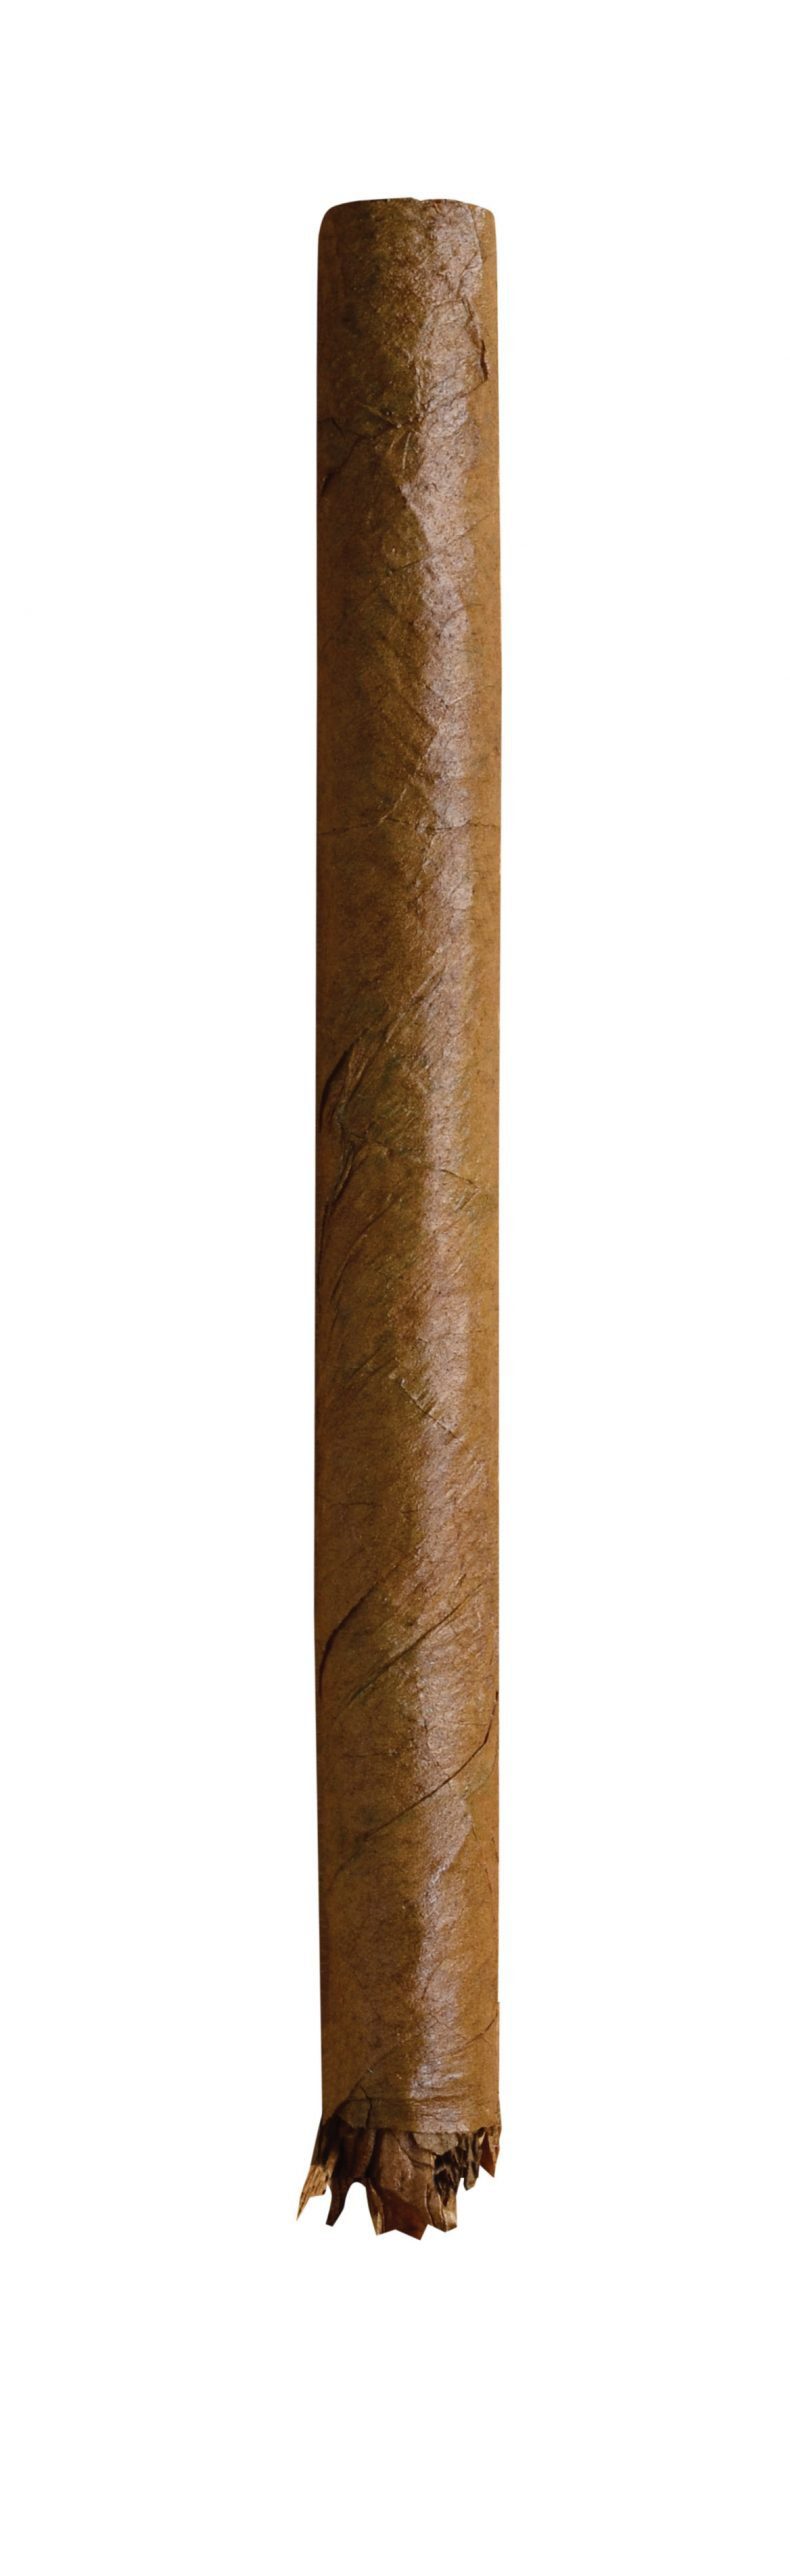 dutch delites sumatra single cigar